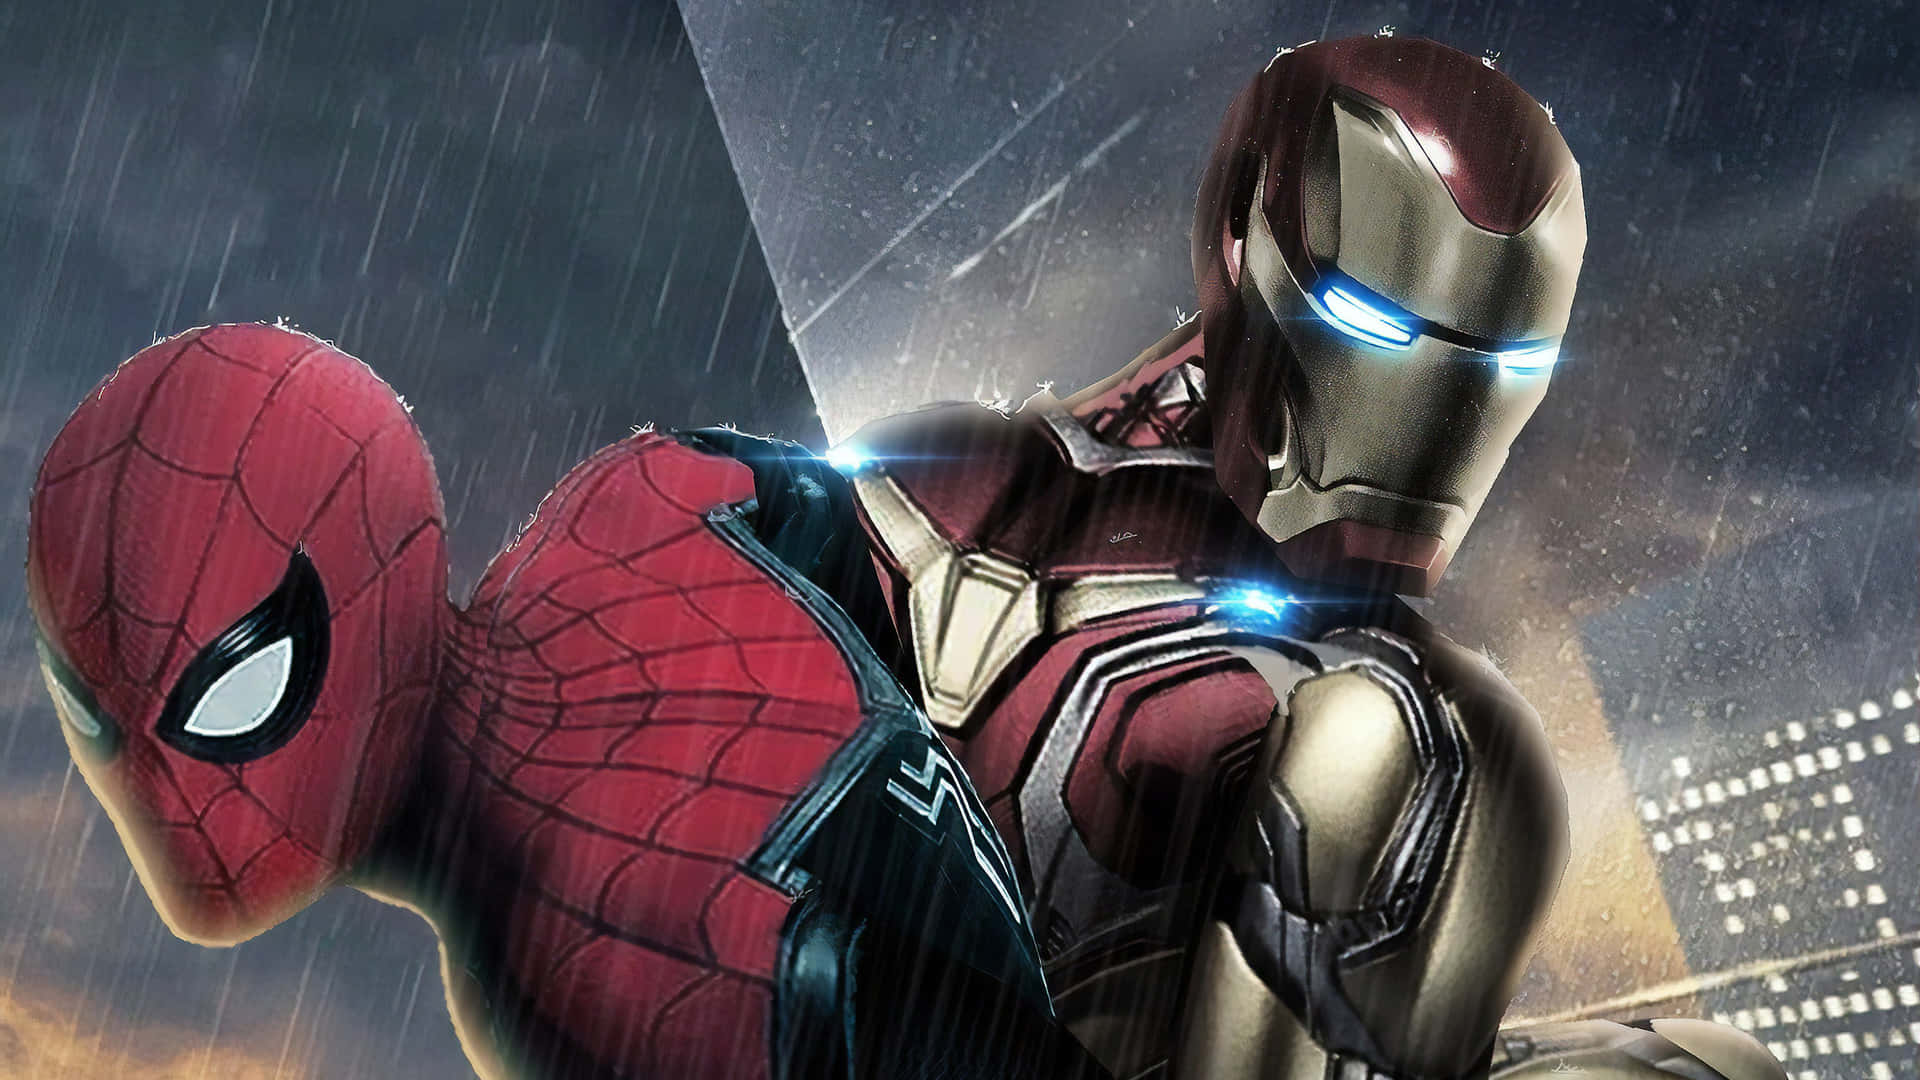 Free Spider Man And Iron Man Wallpaper Downloads, [100+] Spider Man And Iron  Man Wallpapers for FREE 